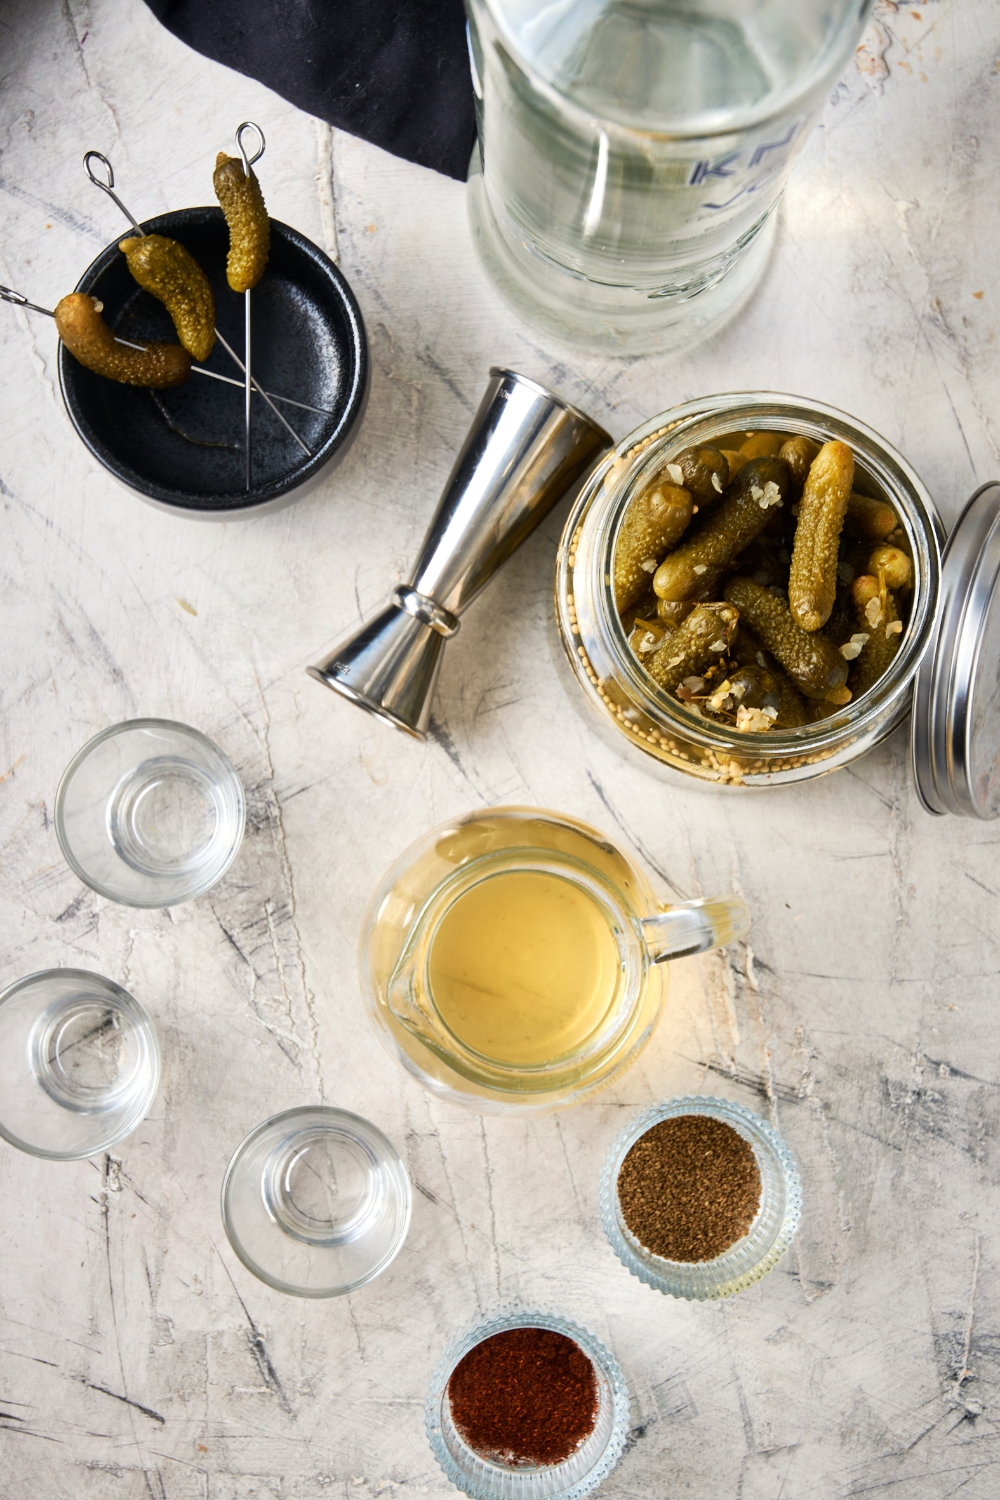 A countertop with pickle juice, tajin seasoning, pickles, vodka, and shot glasses.